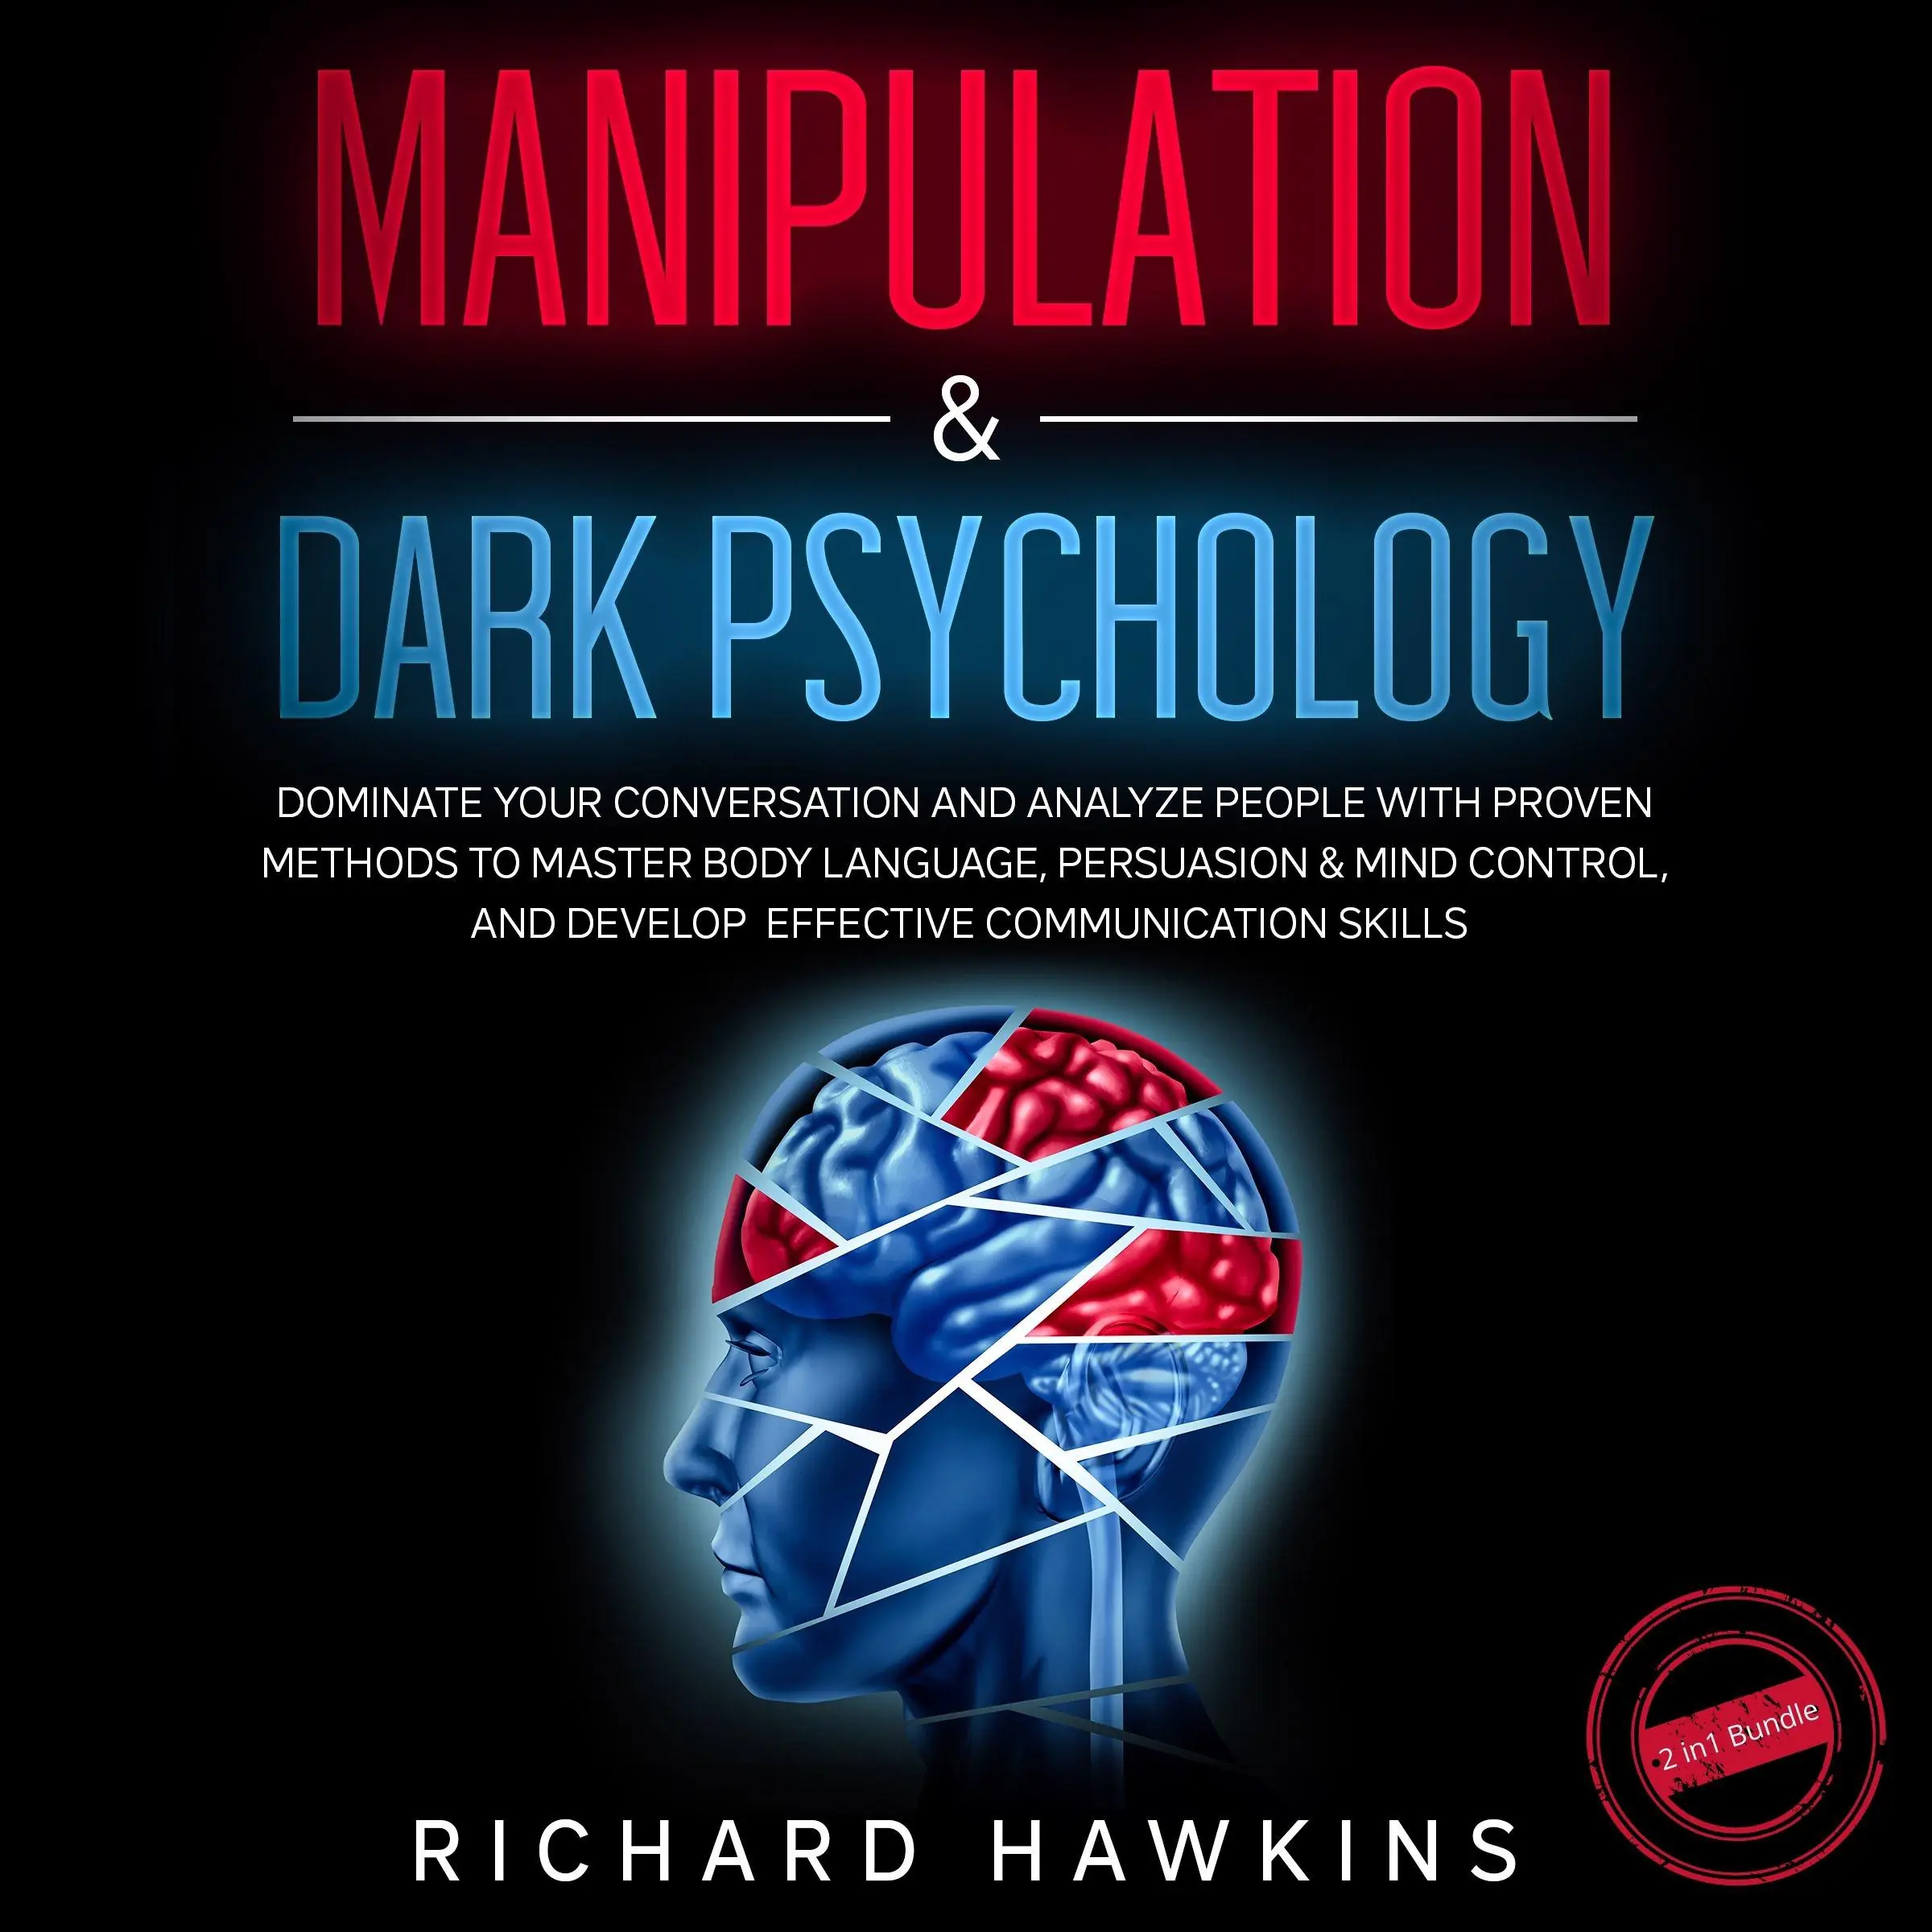 Manipulation & Dark Psychology - 2 in 1 Bundle Audiobook by Richard Hawkins